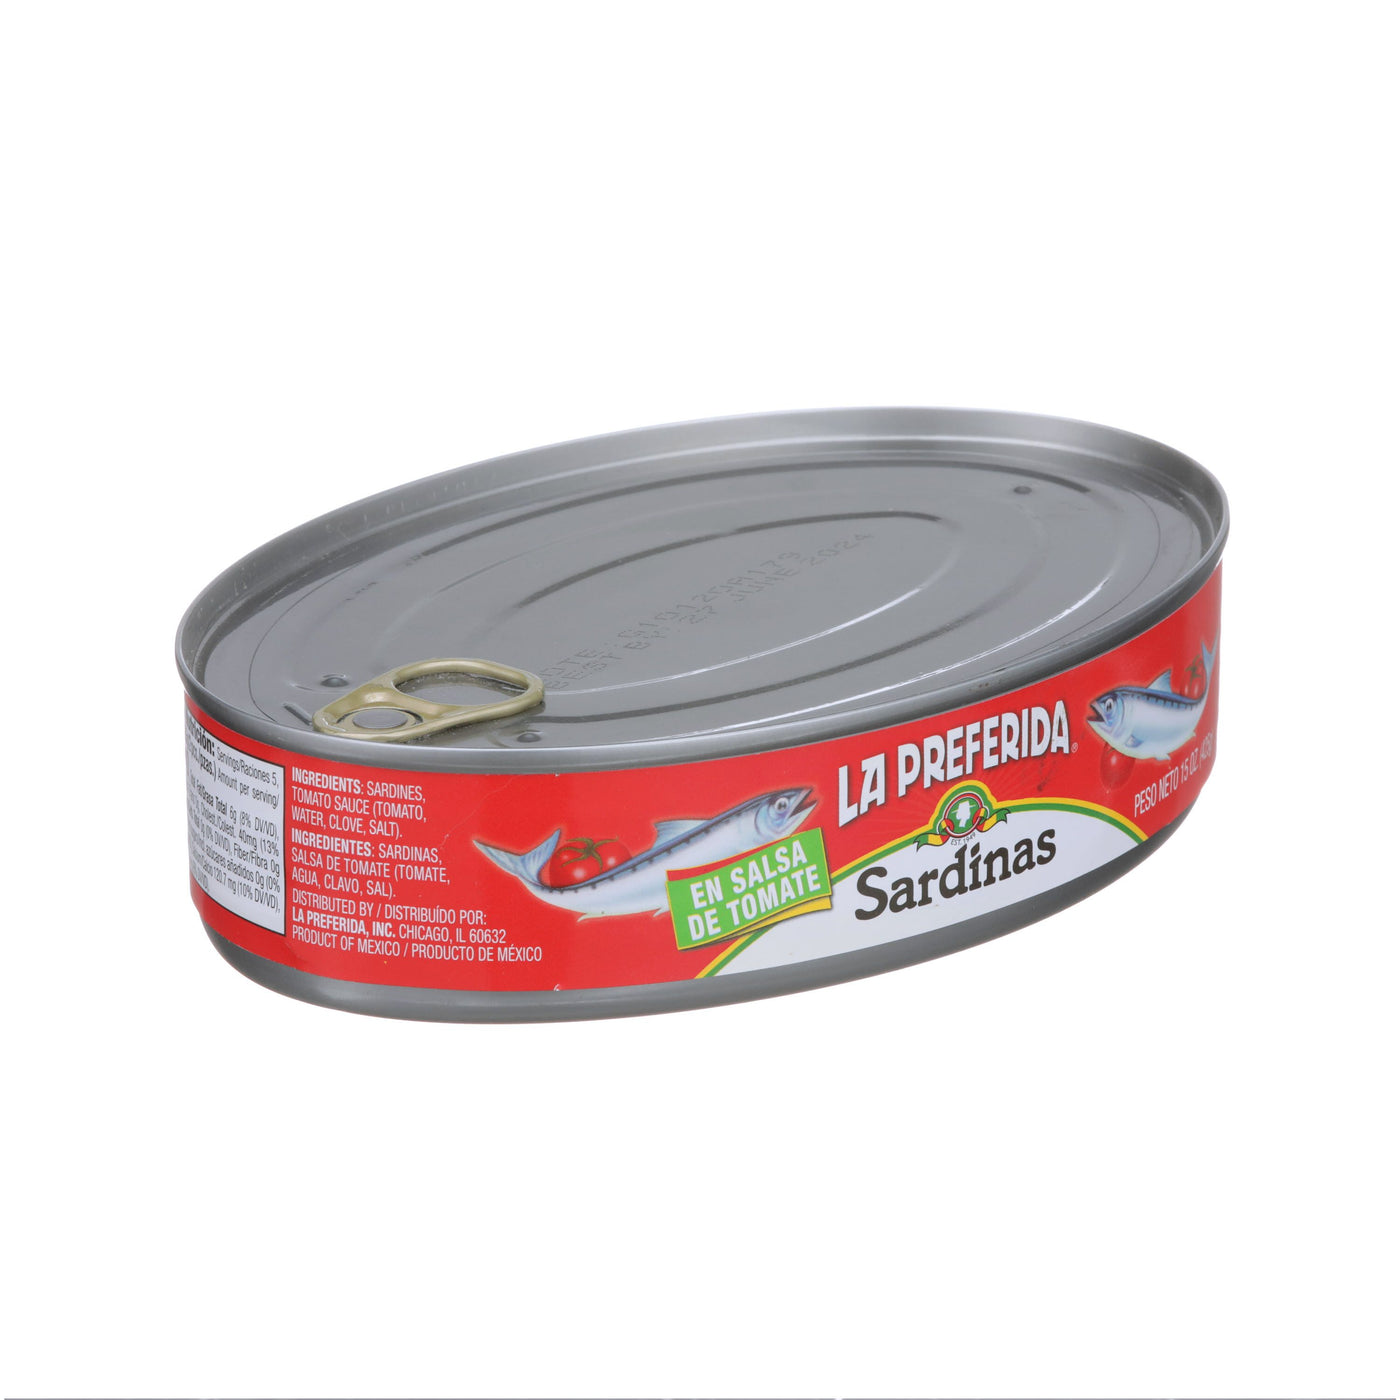 Sardines in Tomato Sauce, 15 OZ